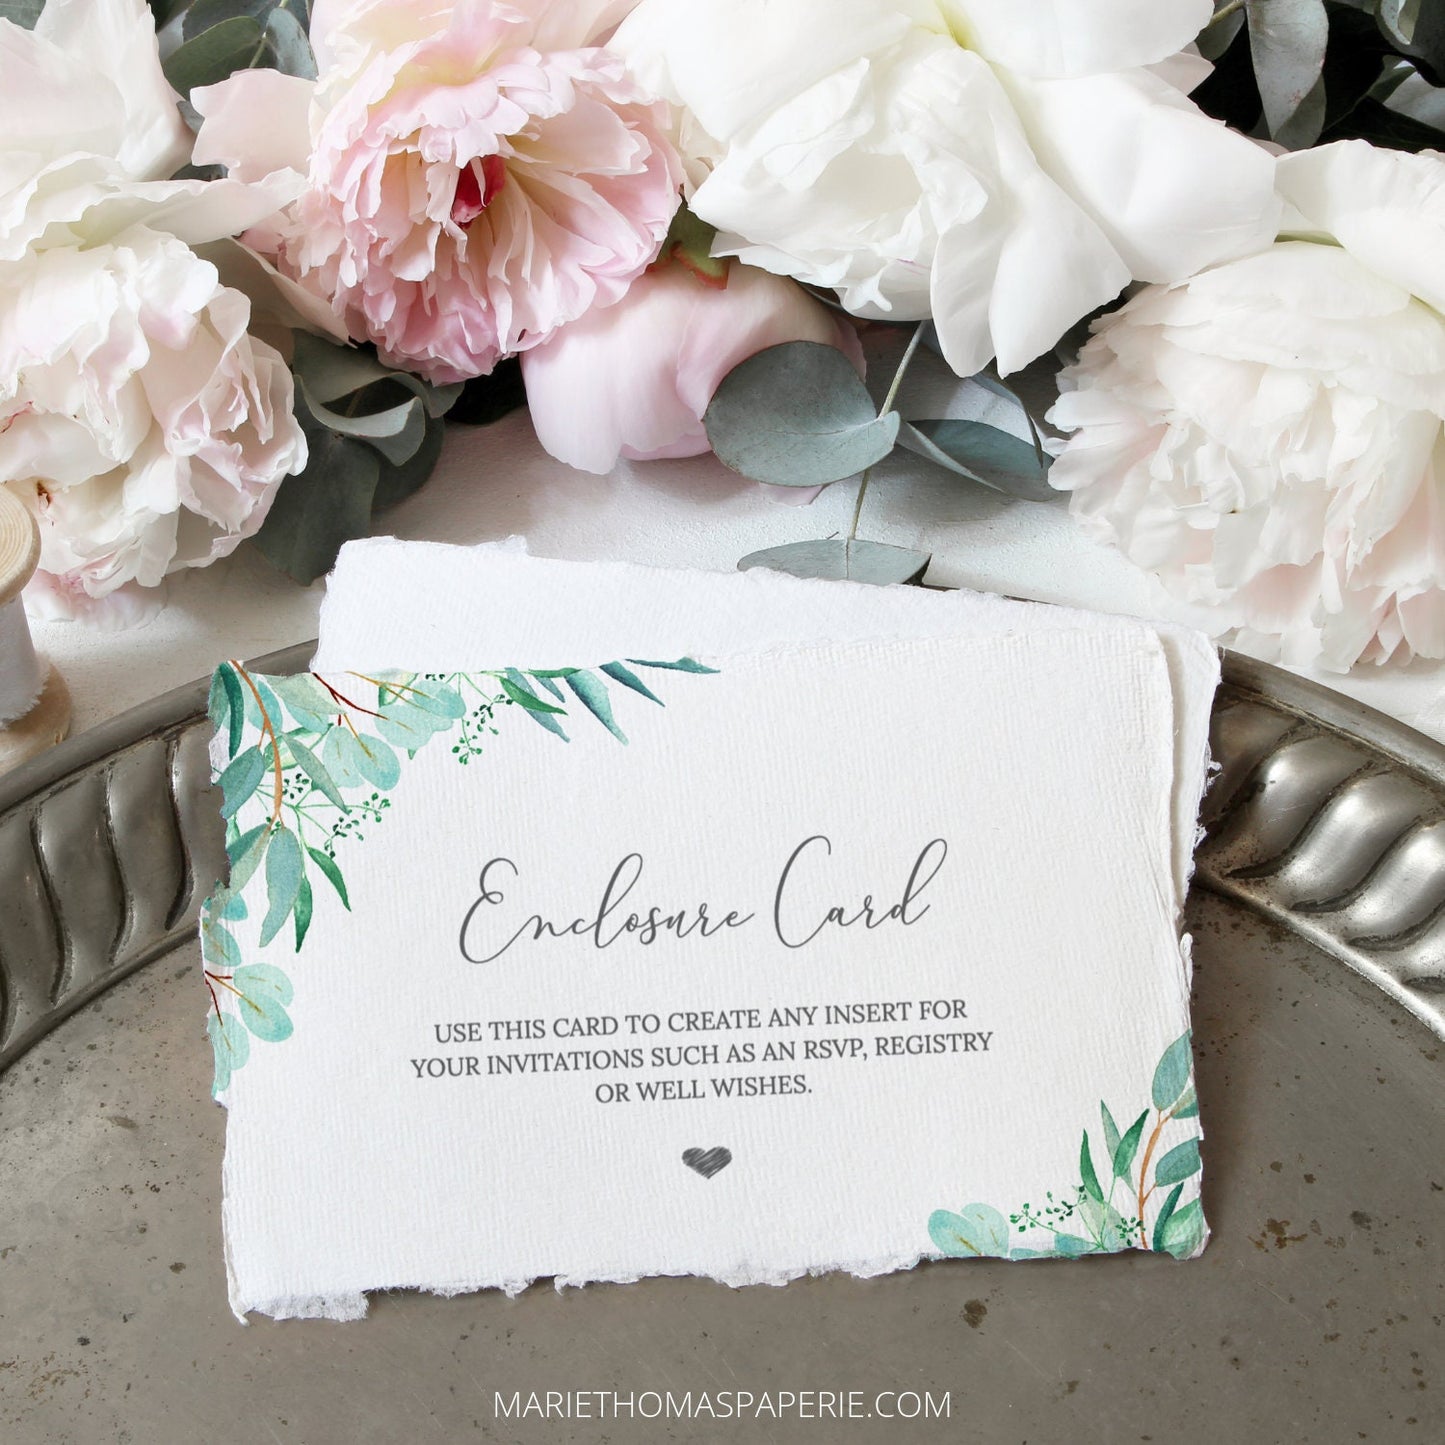 Editable Greenery Insert Card Bridal Shower Registry Insert Wedding Registry Insert Card Enclosure Card Template